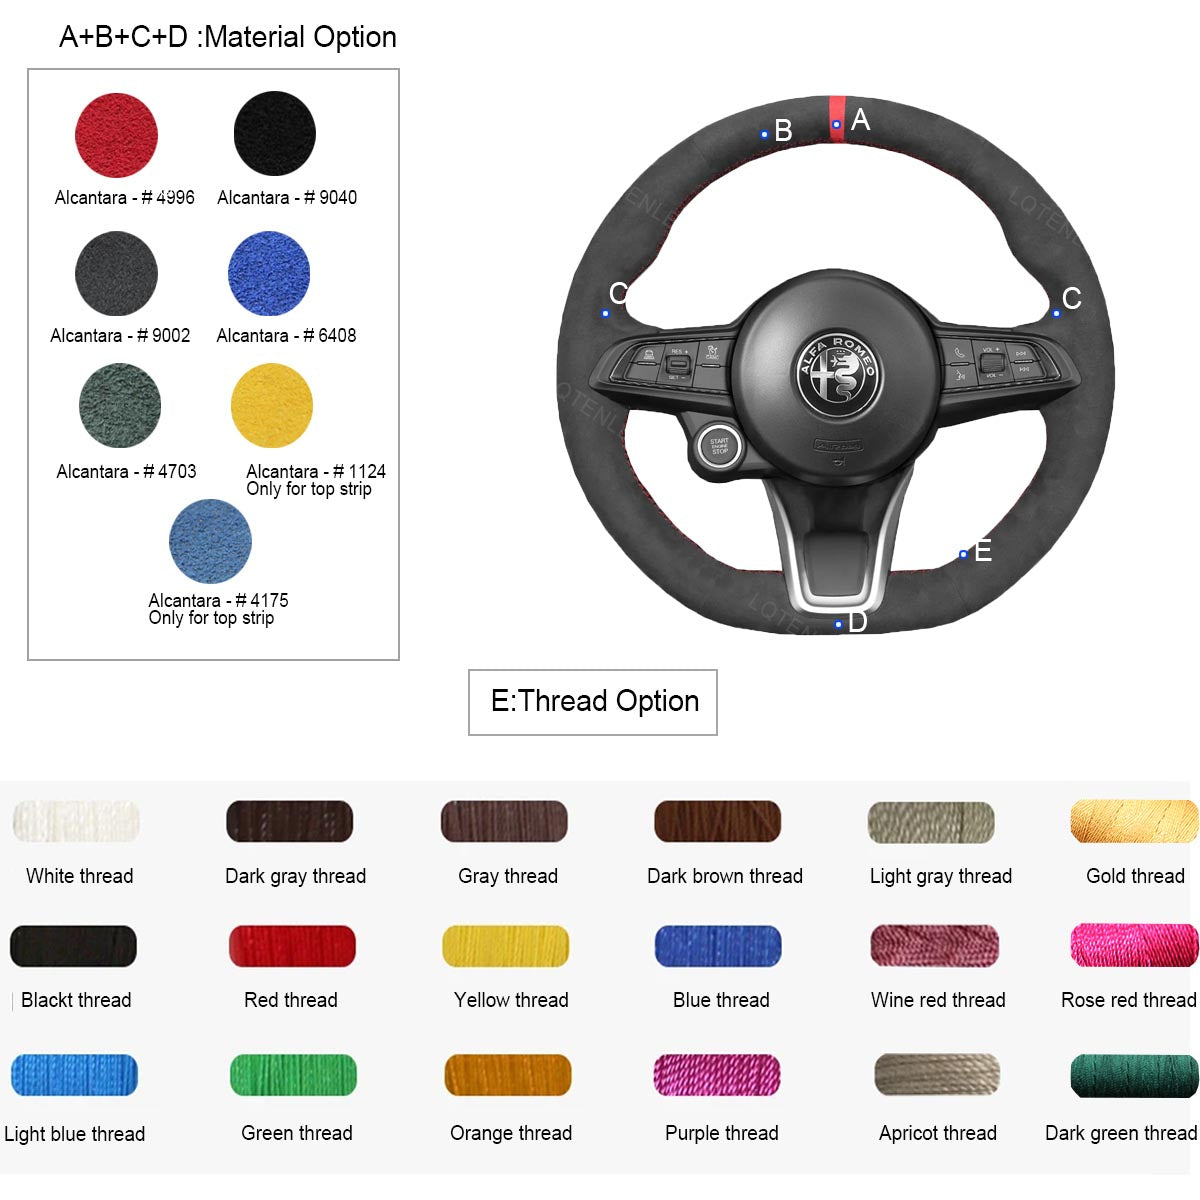 LQTENLEO Alcantara Hand-stitched Car Steering Wheel Cover for Alfa Romeo Giulia 2020-2022 / Stelvio 2020-2022 / Tonale 2022 - LQTENLEO Official Store